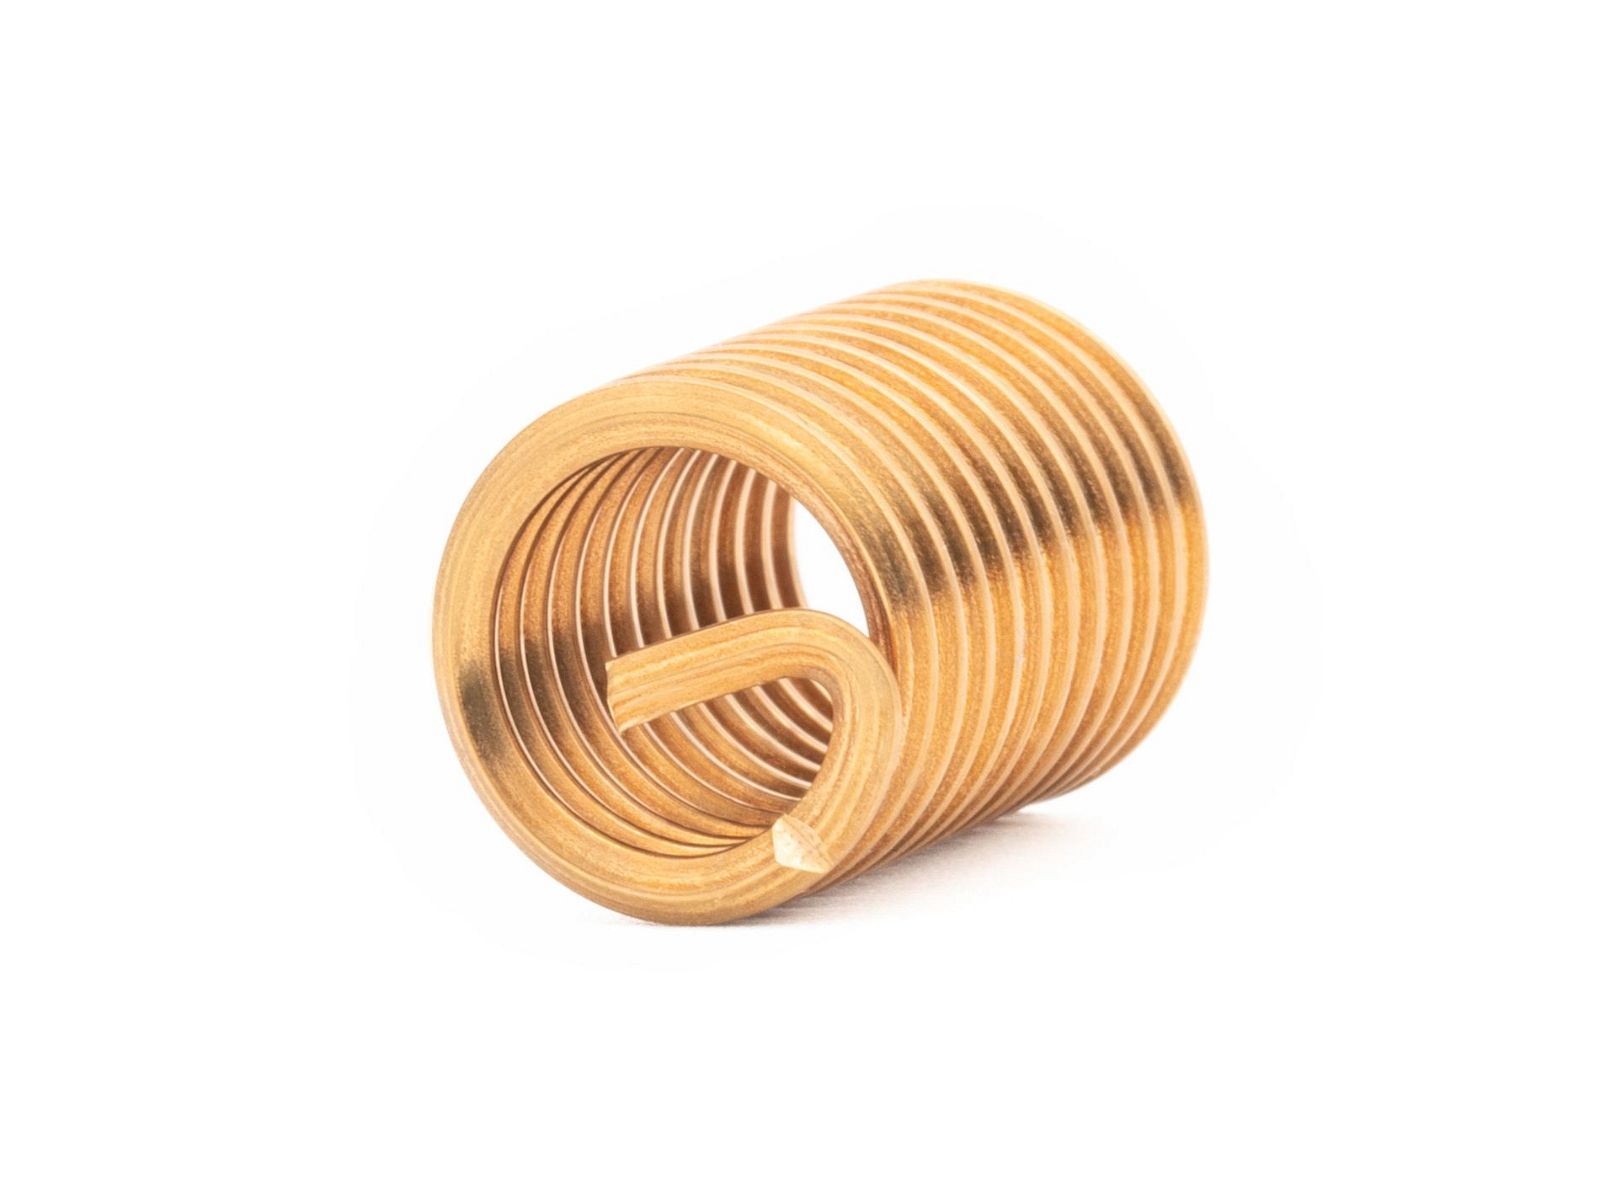 BaerCoil Wire Thread Inserts M 6 x 1.0 - 2.0 D (12 mm) - free running - Bronze - 100 pcs.